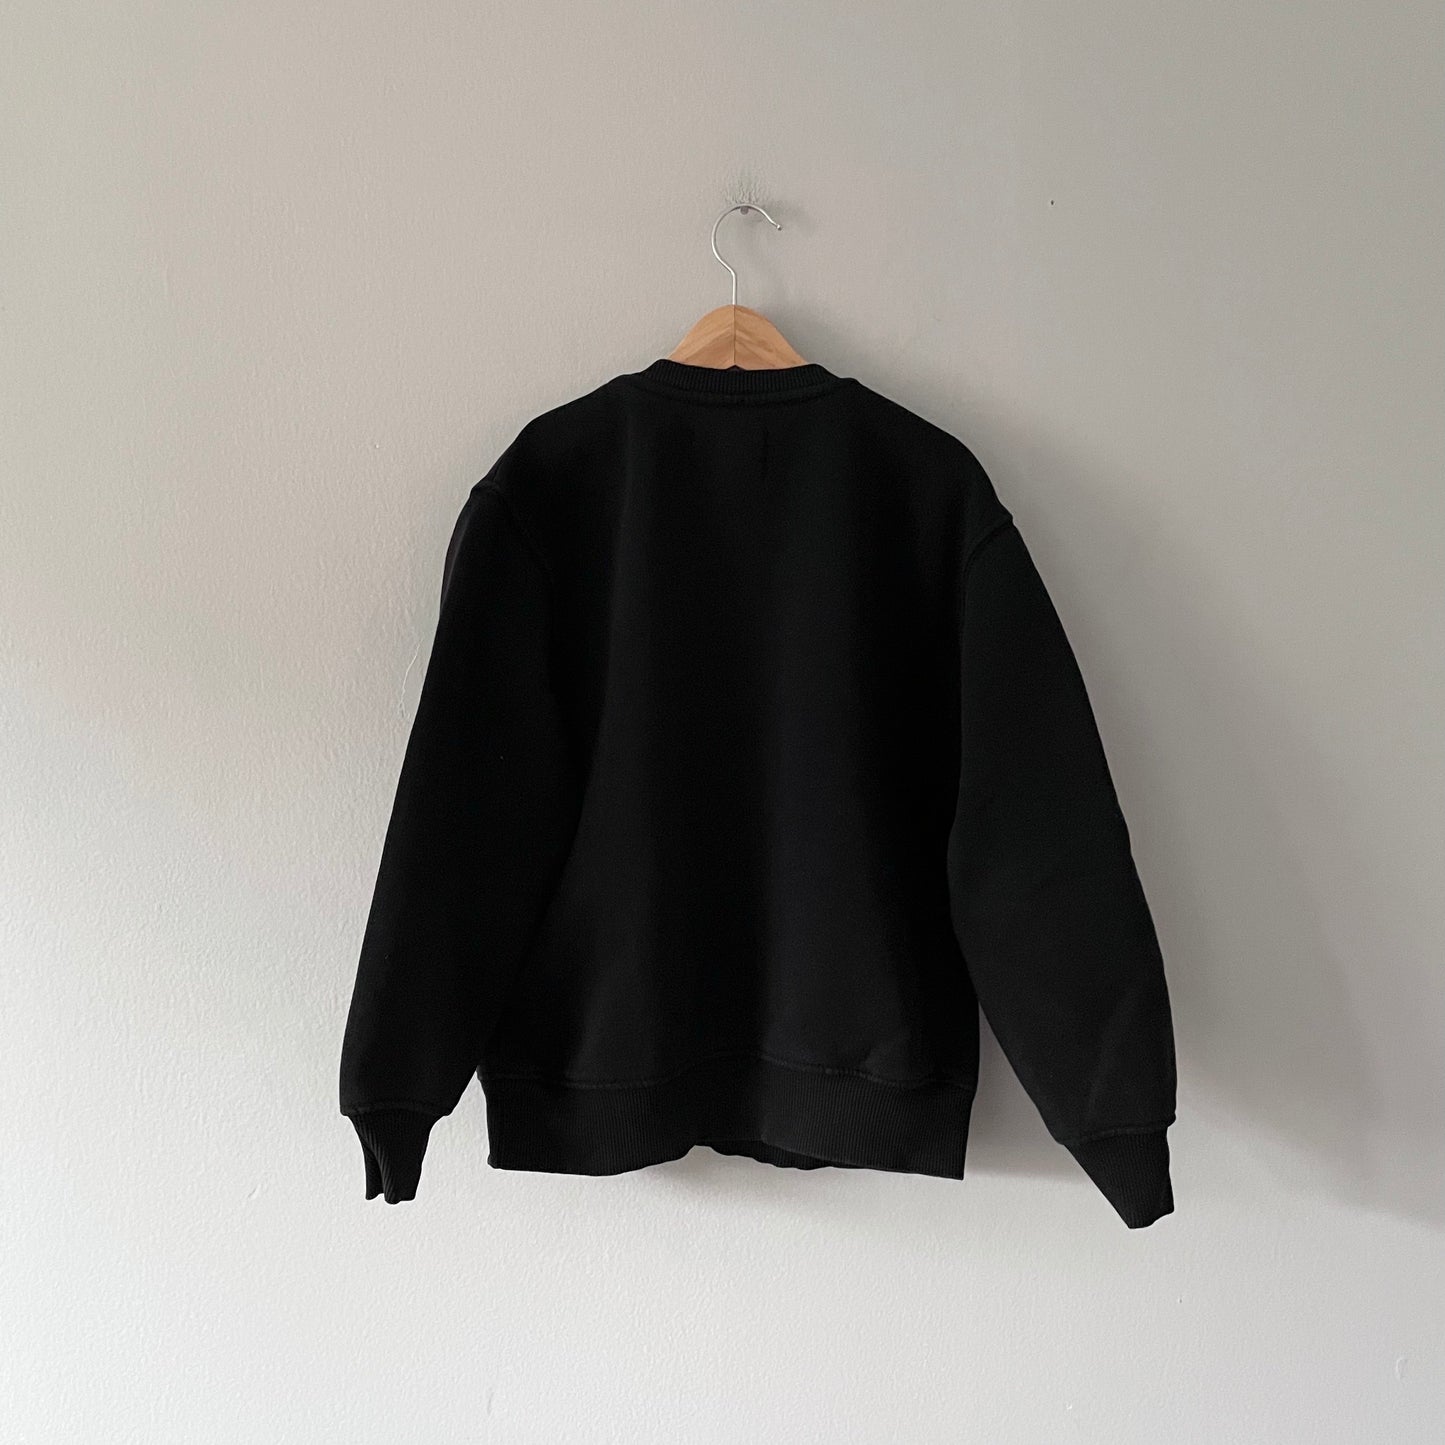 Zara / Plain black sweatshirt / 8Y